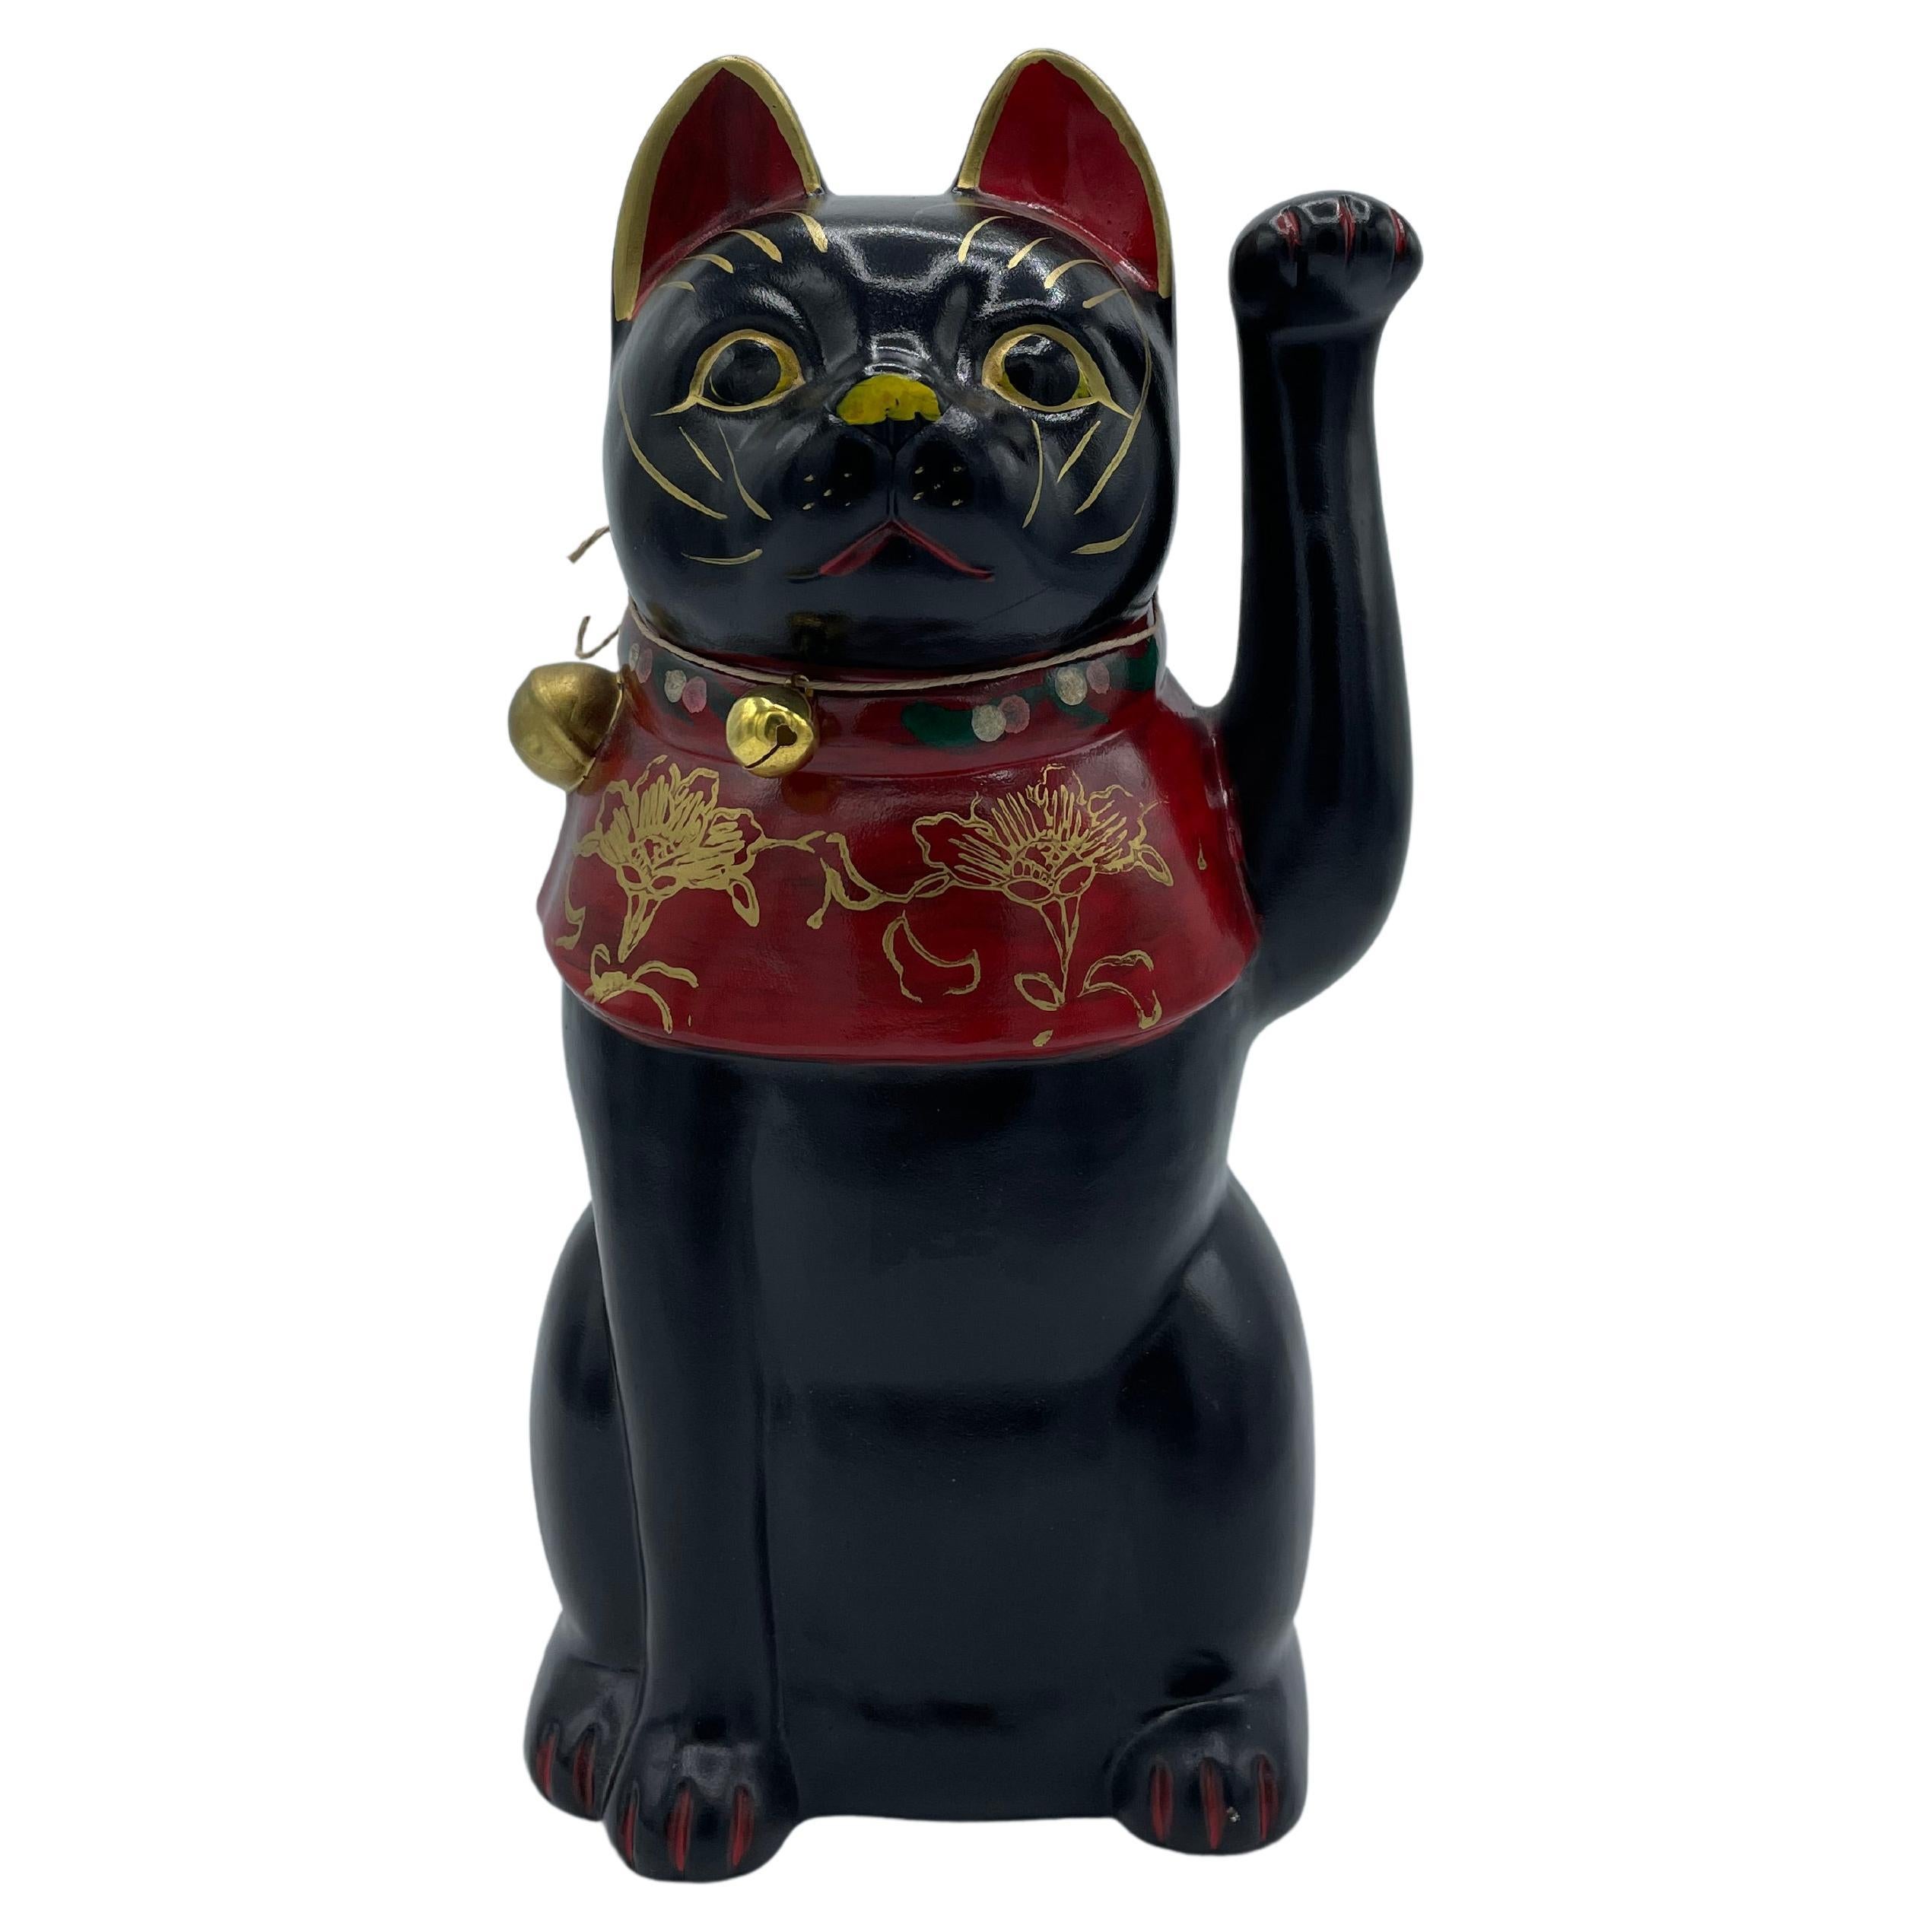 Antique Japanese Manekineko Black Cat Object, 1960s